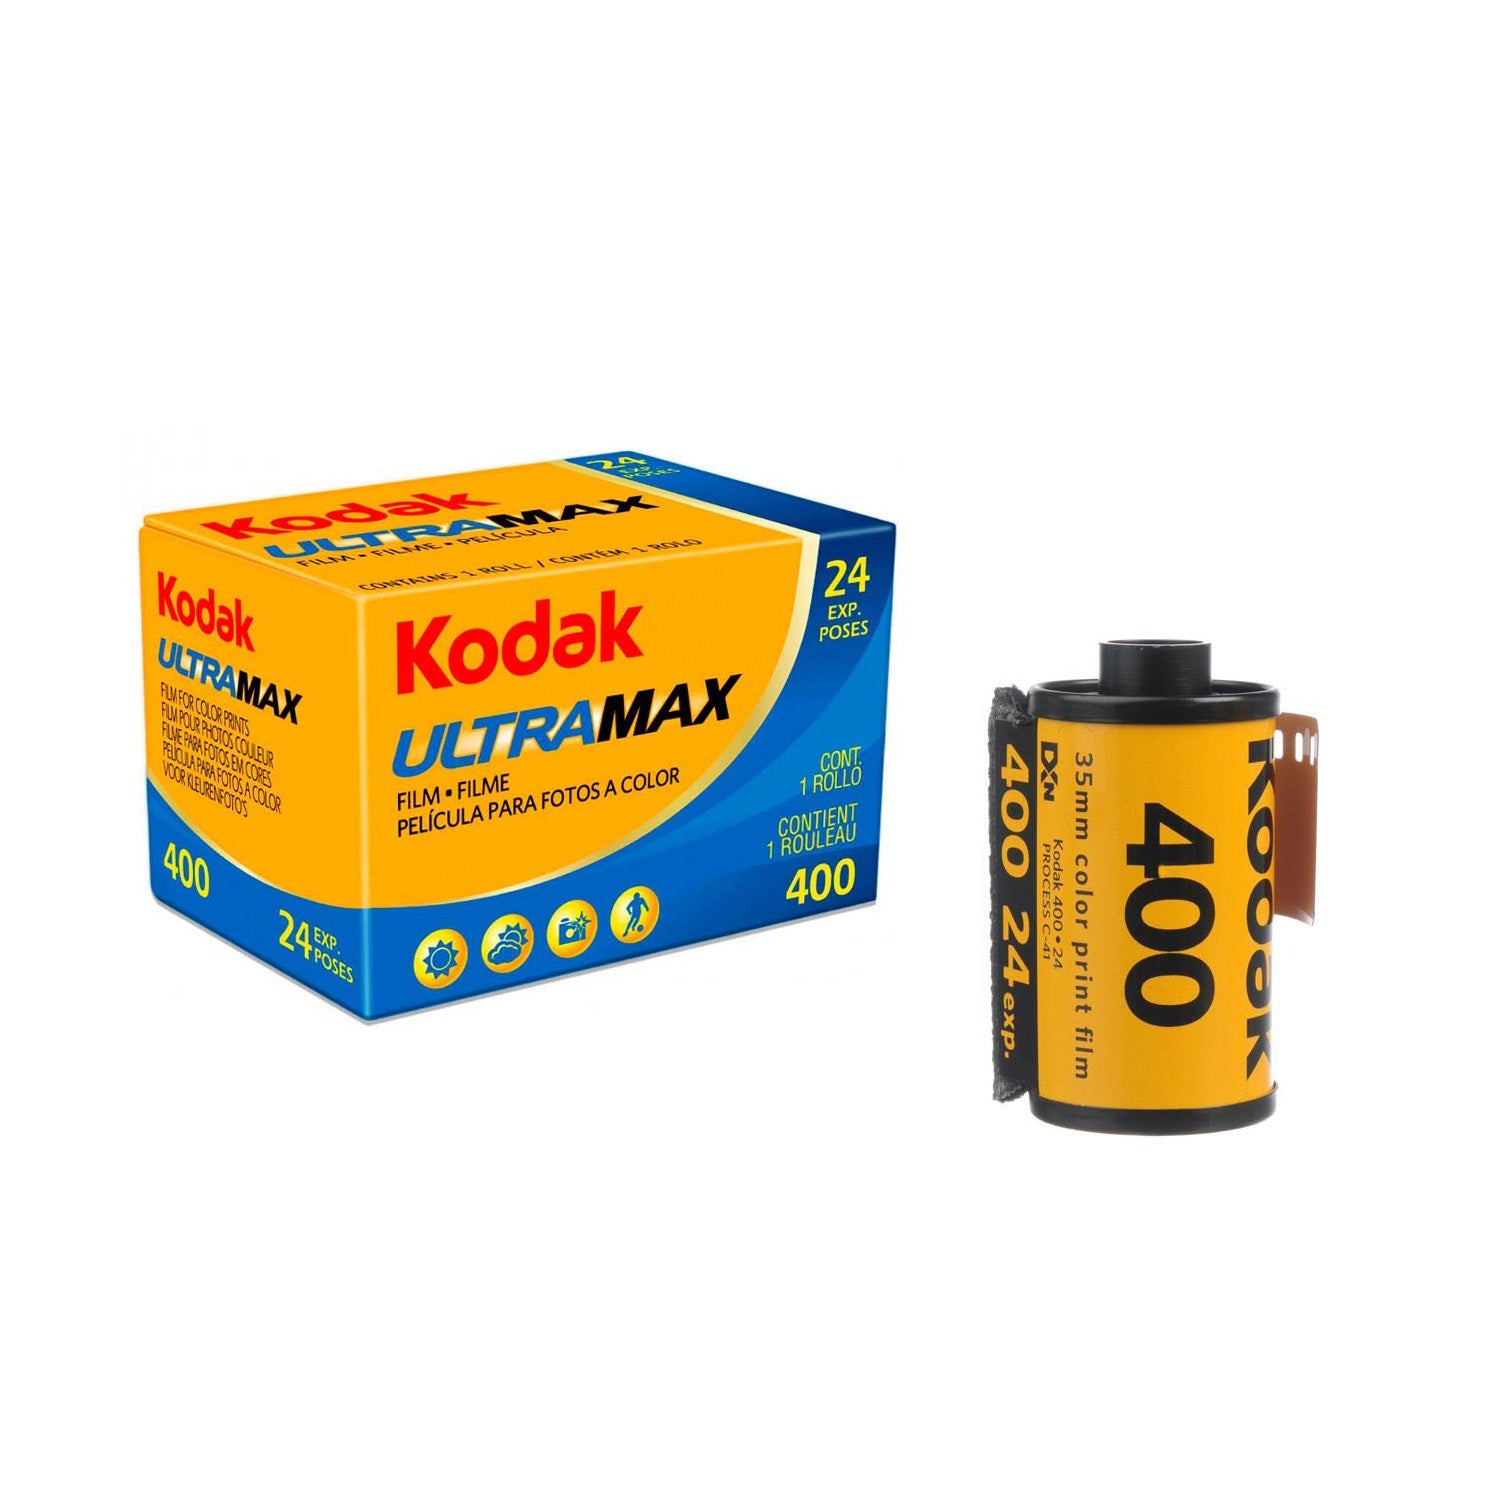 Kodak Ultramax 400 24 exposure colour film